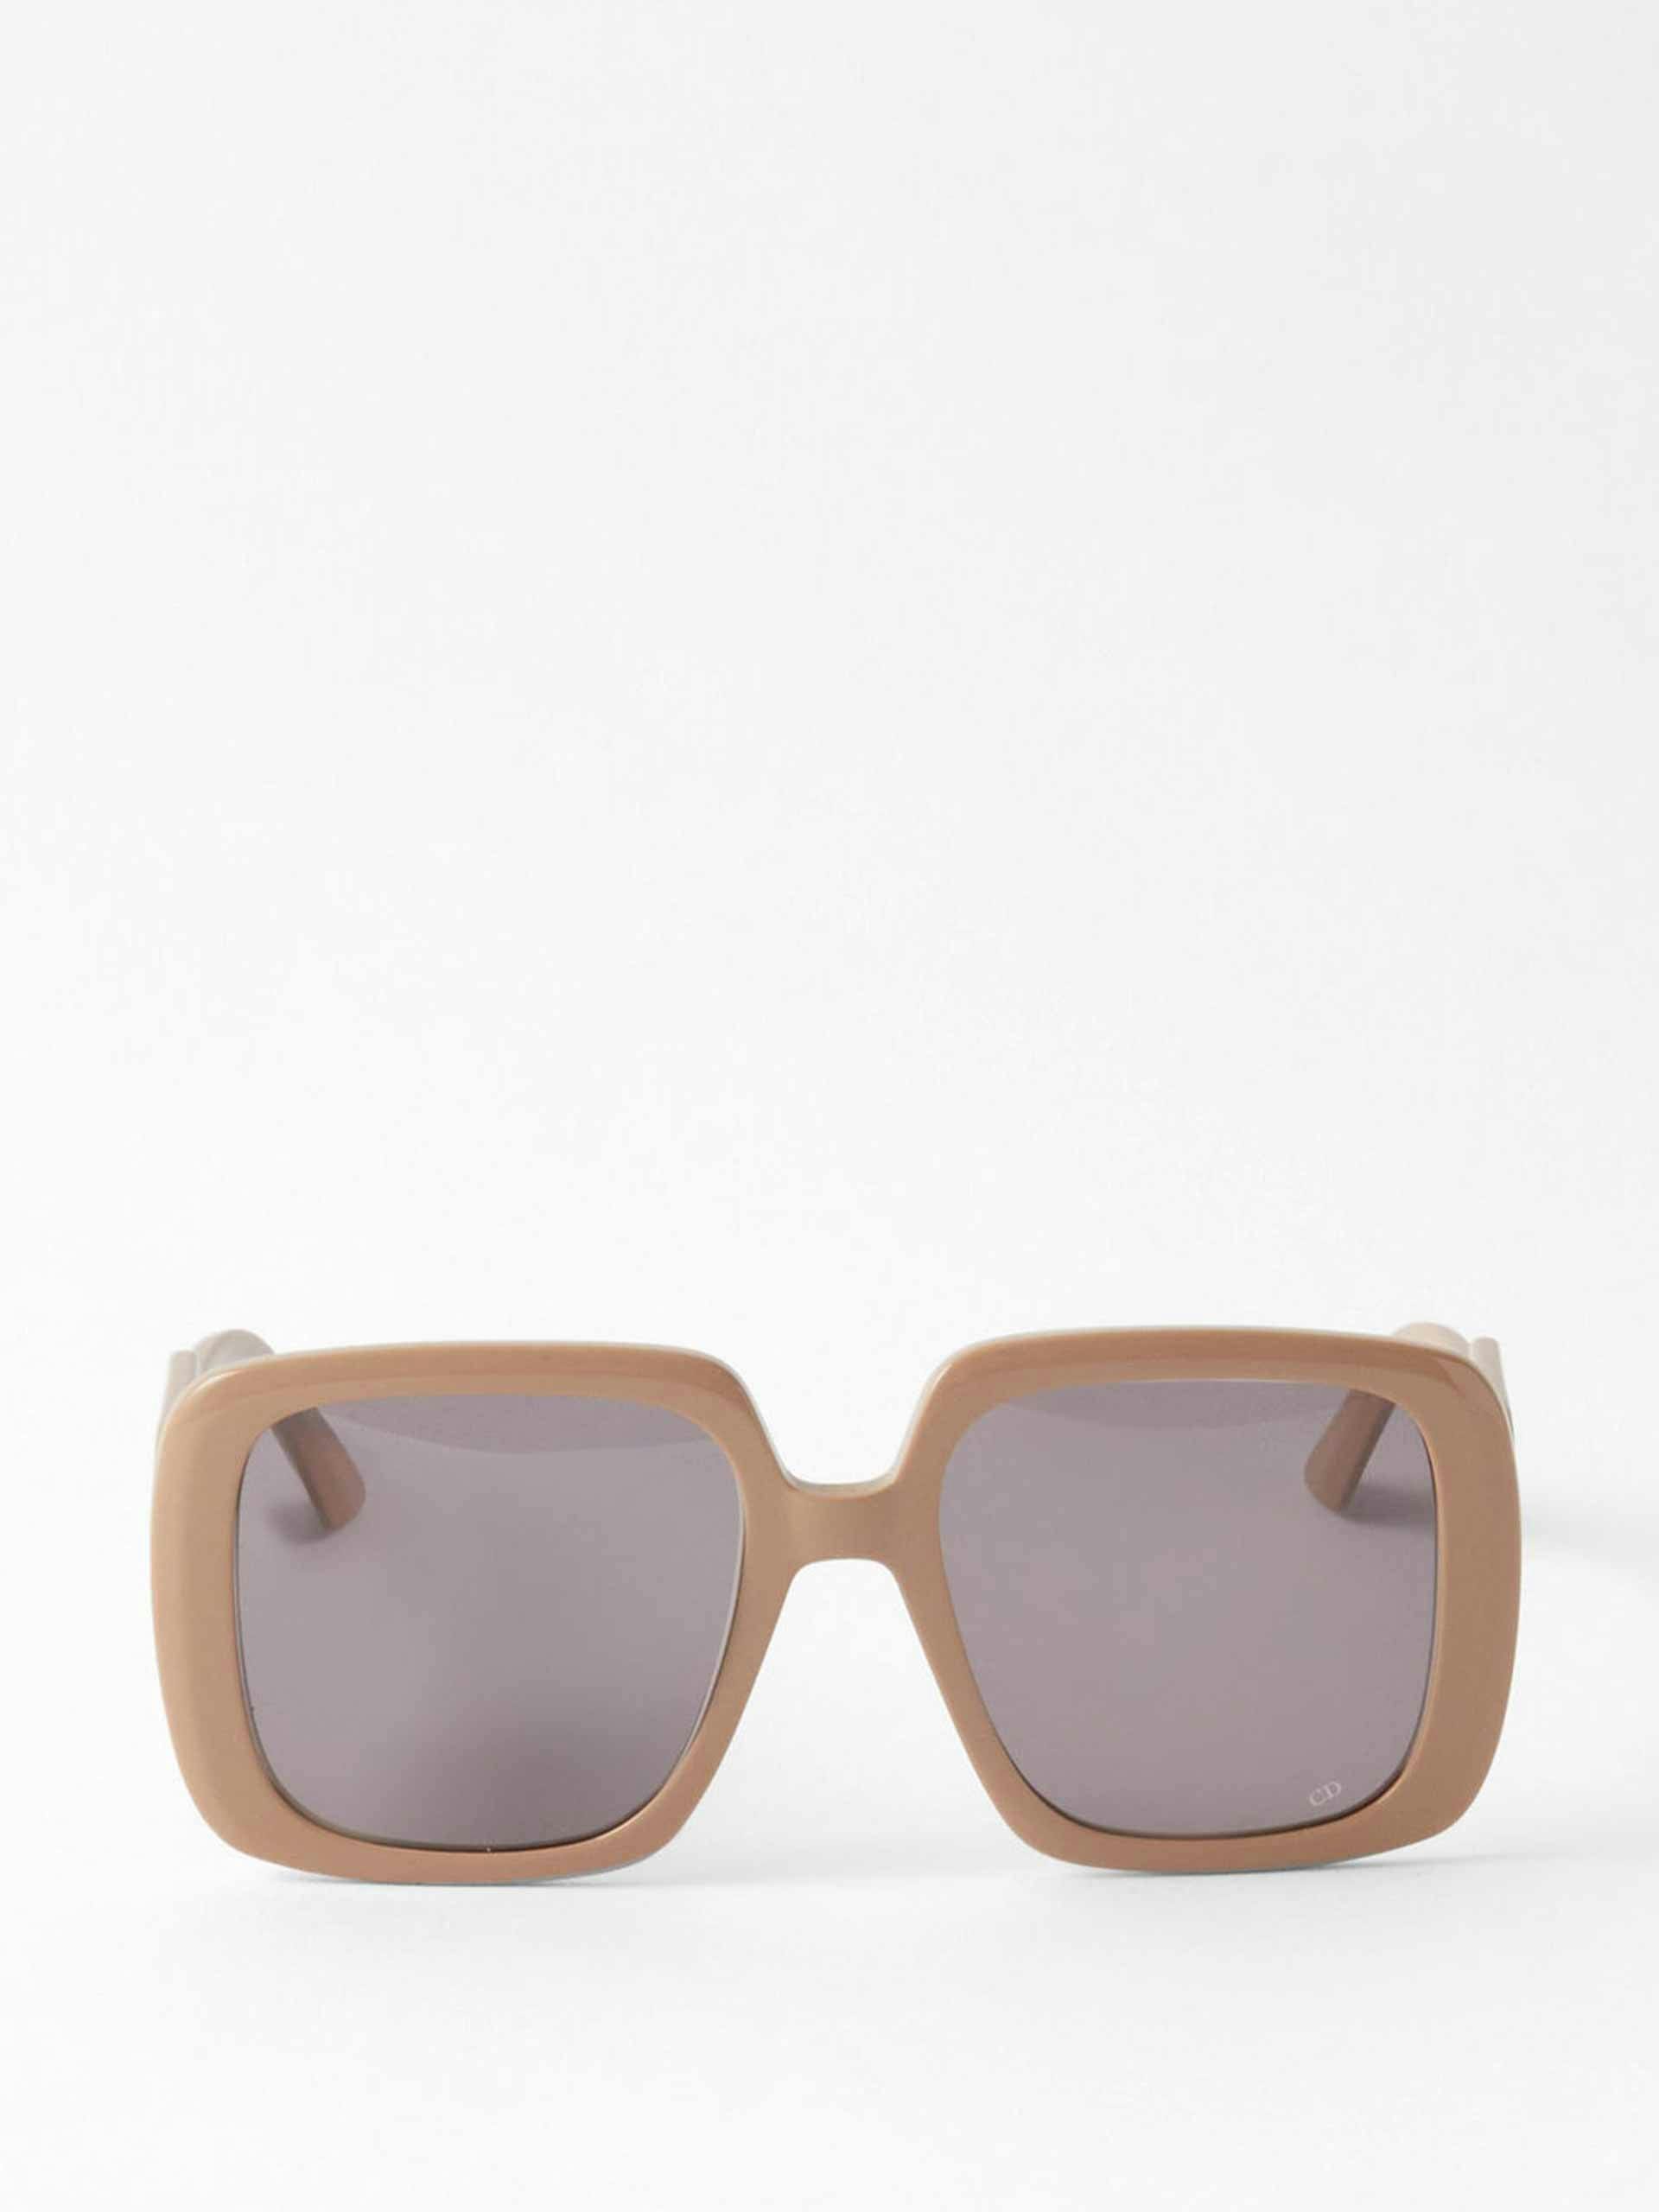 Beige oversized square frame sunglasses